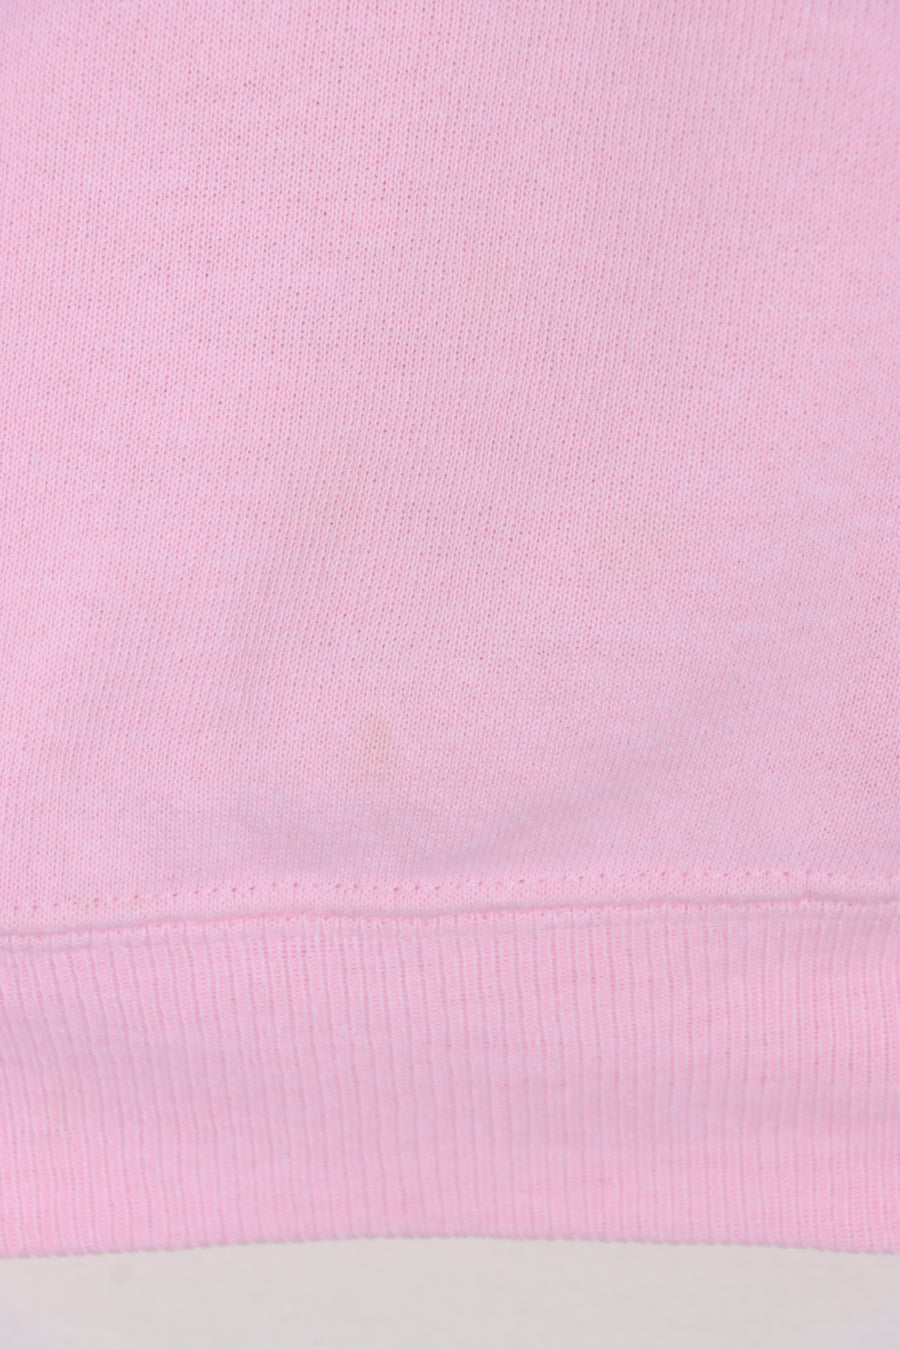 Carousel Horse 80s Glitter Print Pink Sweatshirt USA Made (M)